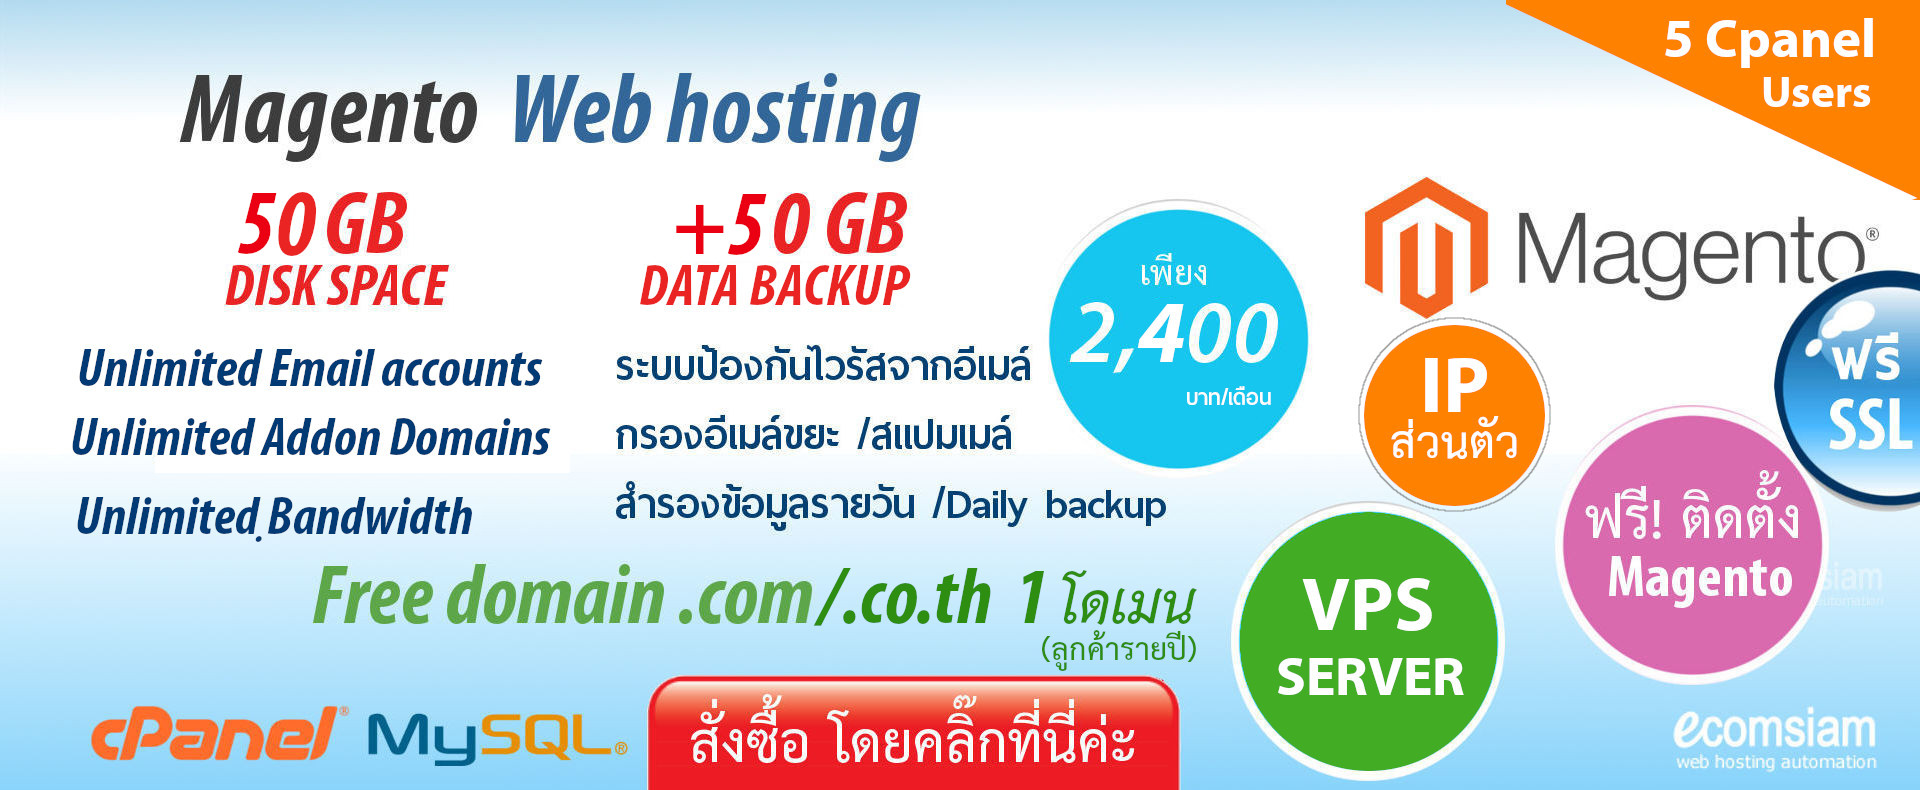 web hosting thailand แนะนำ magento web hosting  ฟรีโดเมน ฟรี SSL เว็บโฮสติ้งไทย ราคาเบาๆ